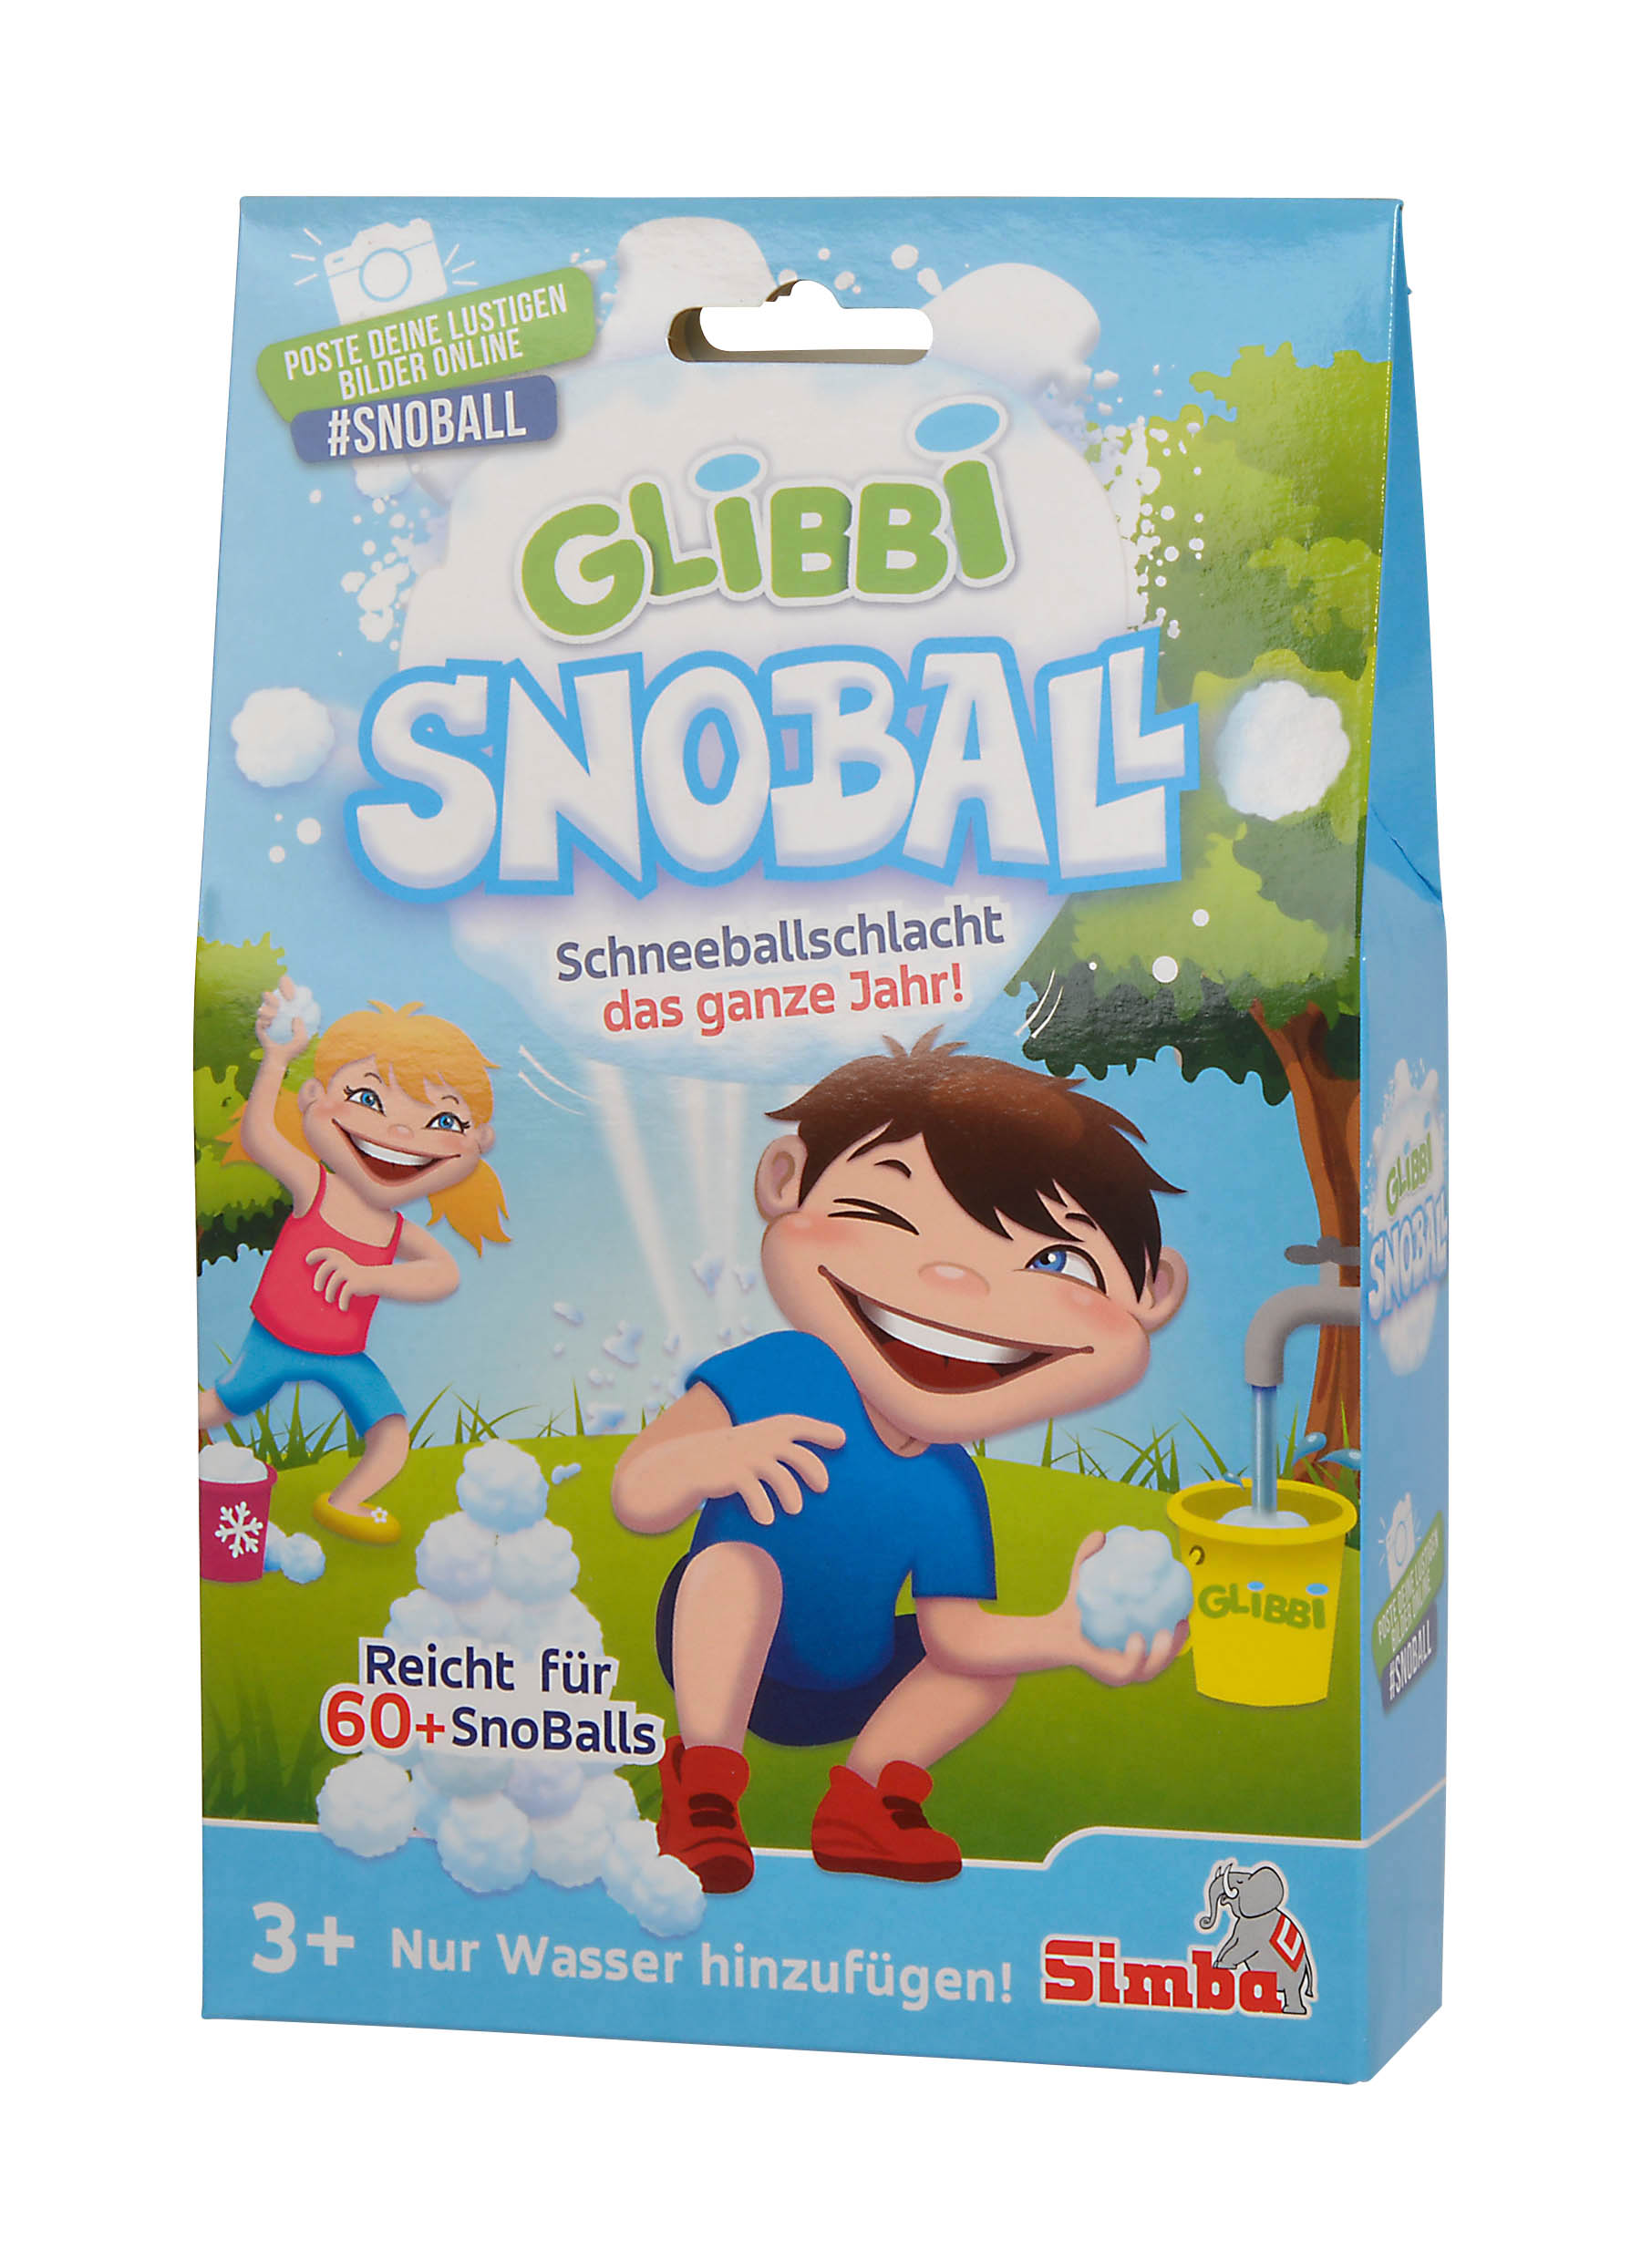 Glibbi – Snoball